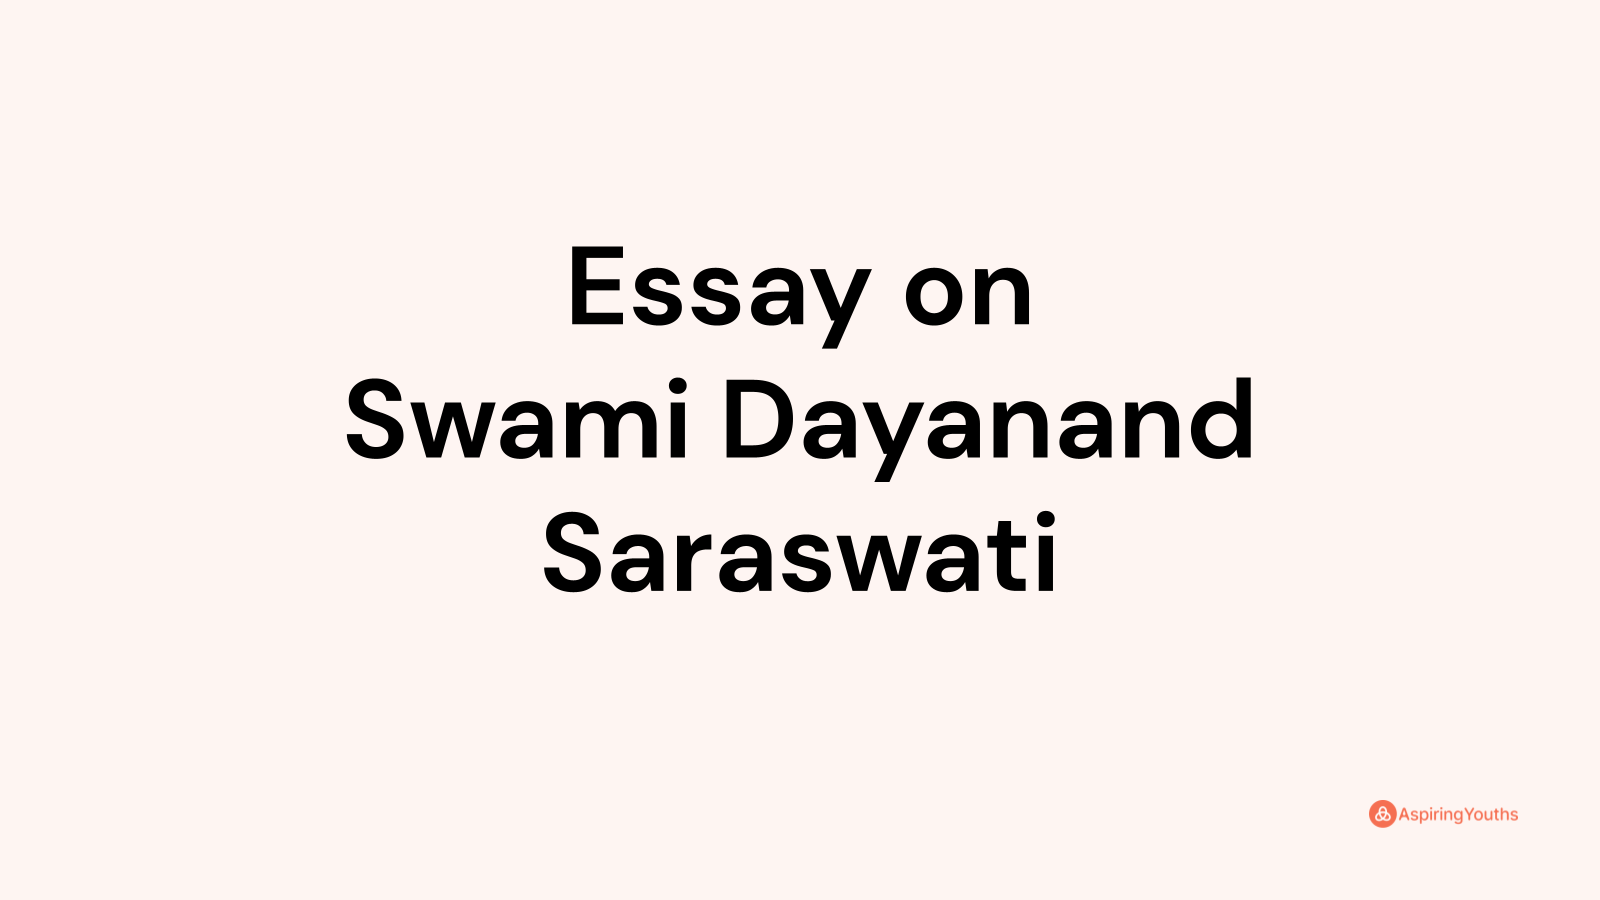 Essay on Swami Dayanand Saraswati